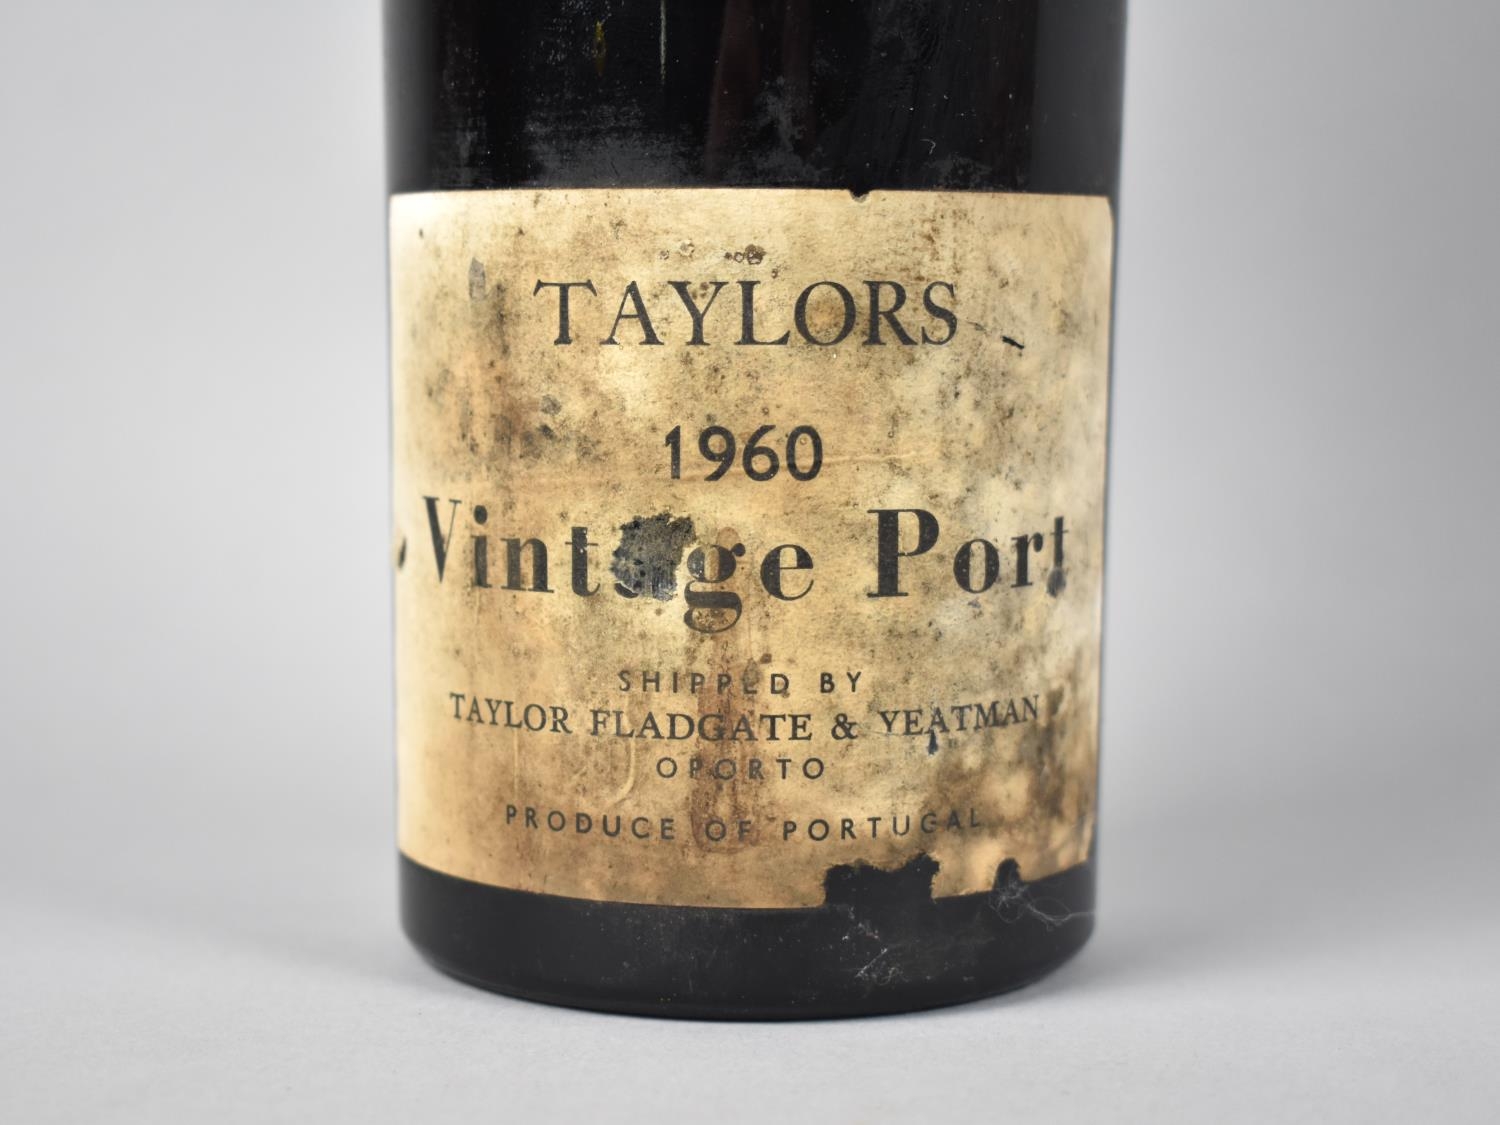 A Single Bottle of Taylors 1960 Vintage Port - Image 2 of 2